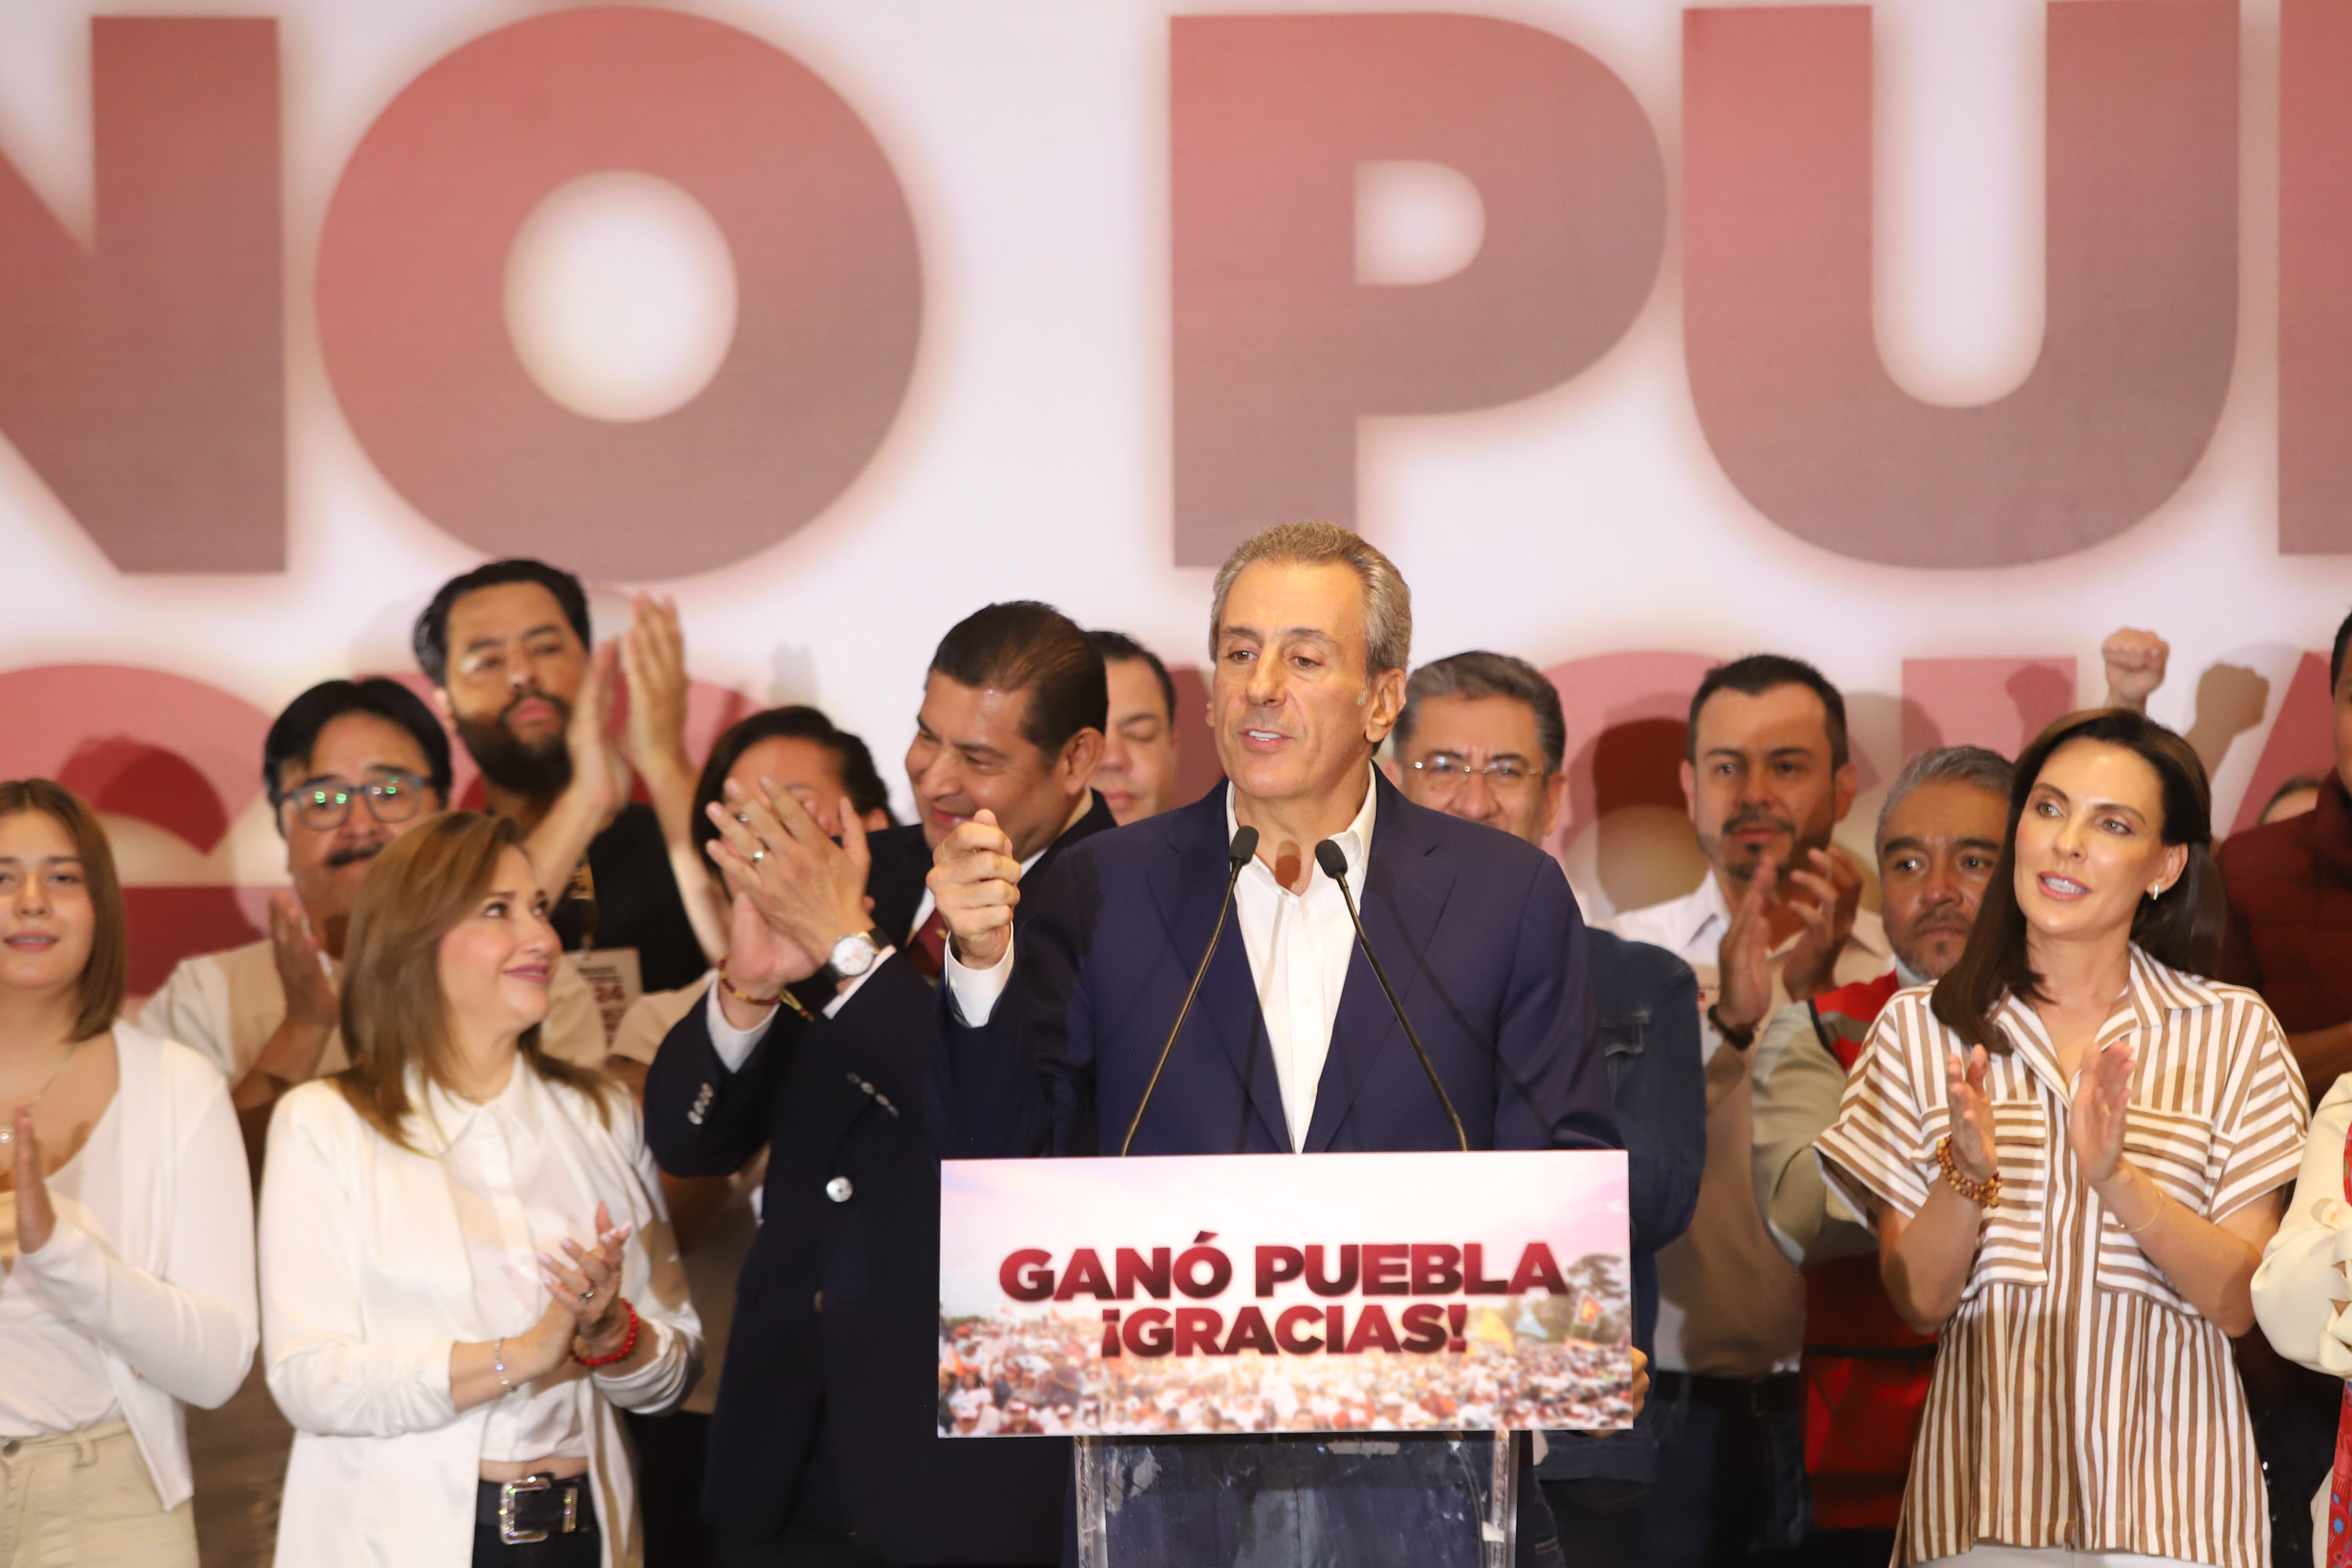 Pepe Chedraui aventaja 19.6% sobre Mario Riestra, señala CEC